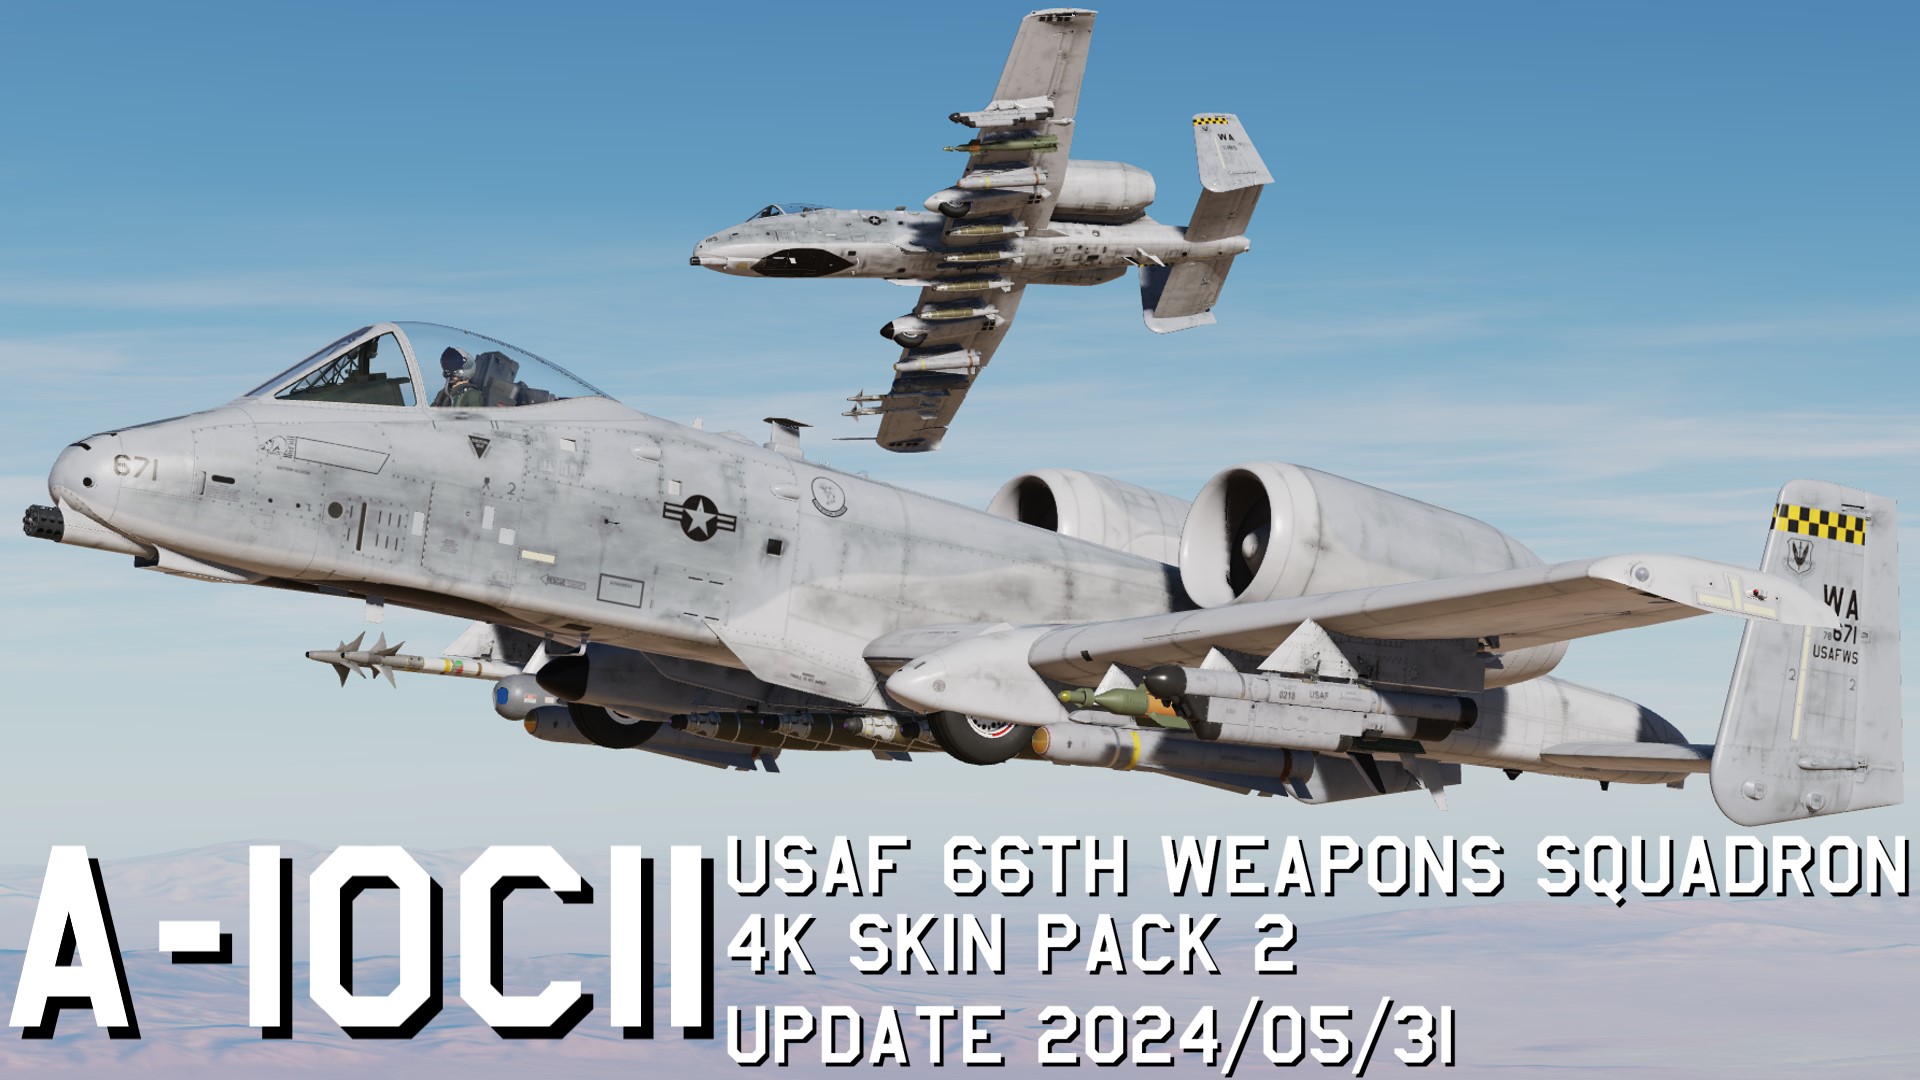 A-10C II  USAF 66th Weapons Squadron 4K Skin Pack 2 update 2024/05/31